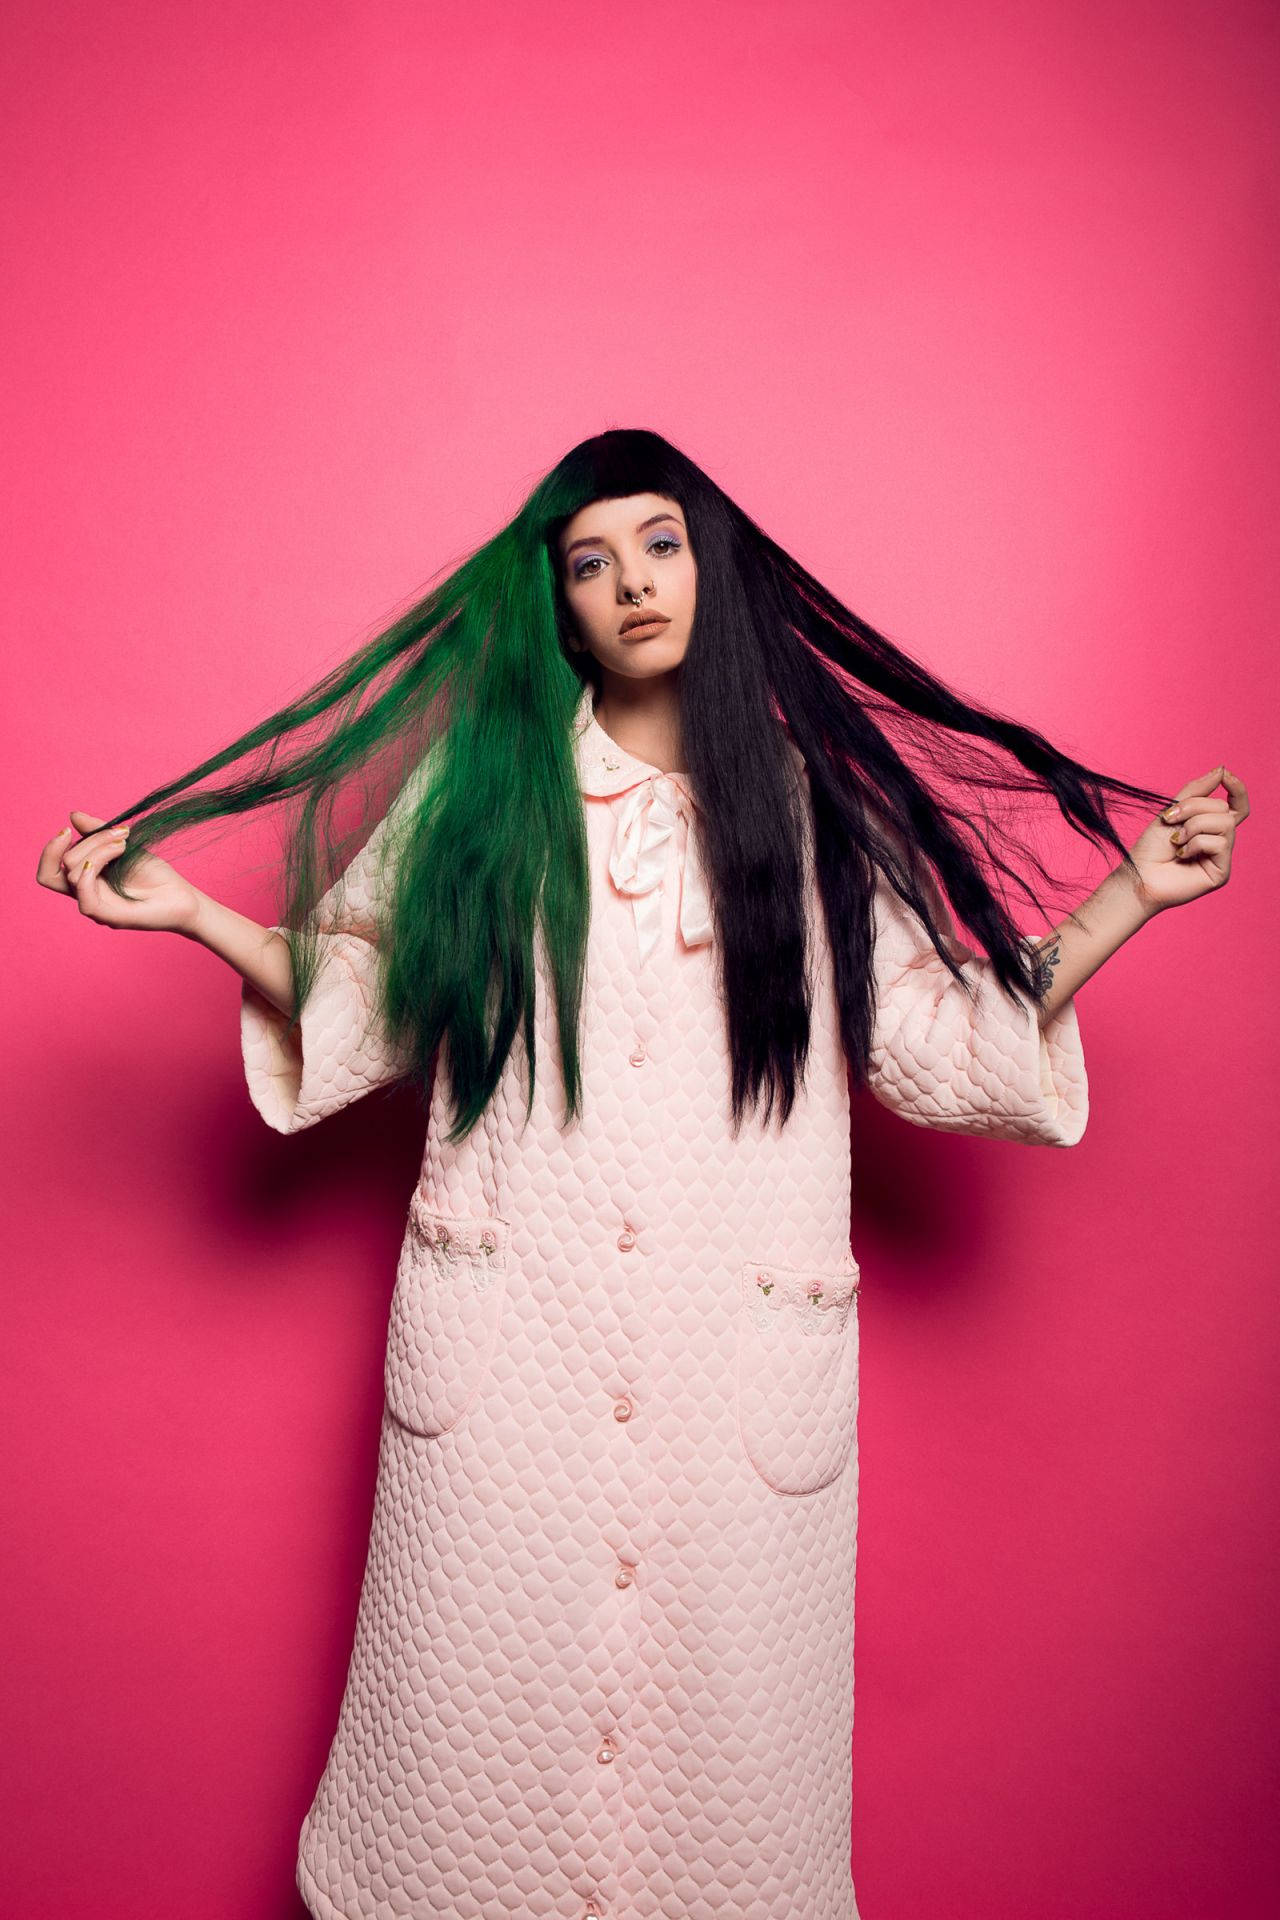 Melanie Martinez Green Hair Wallpaper